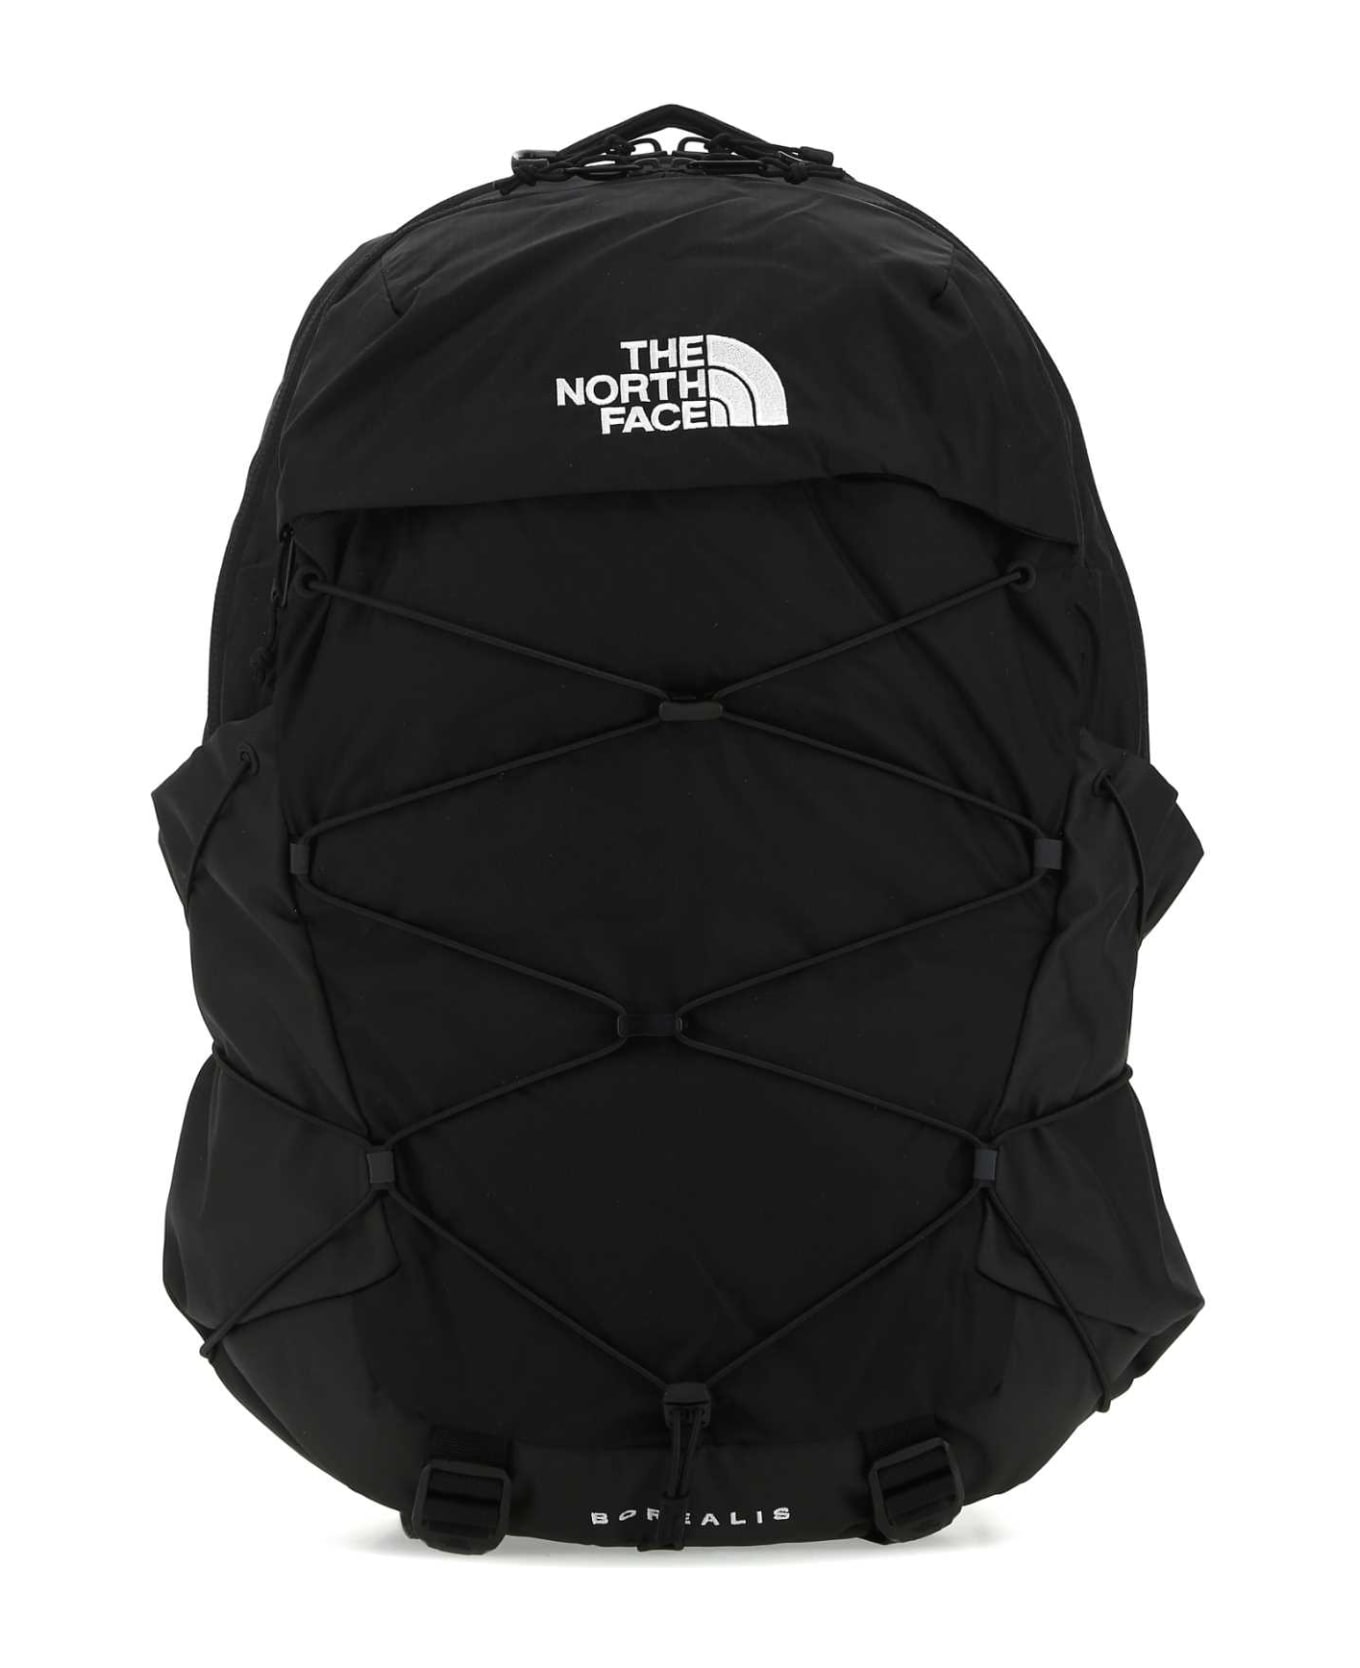 The North Face Black Nylon Borealis Backpack - TNF BLK/TNF BLK